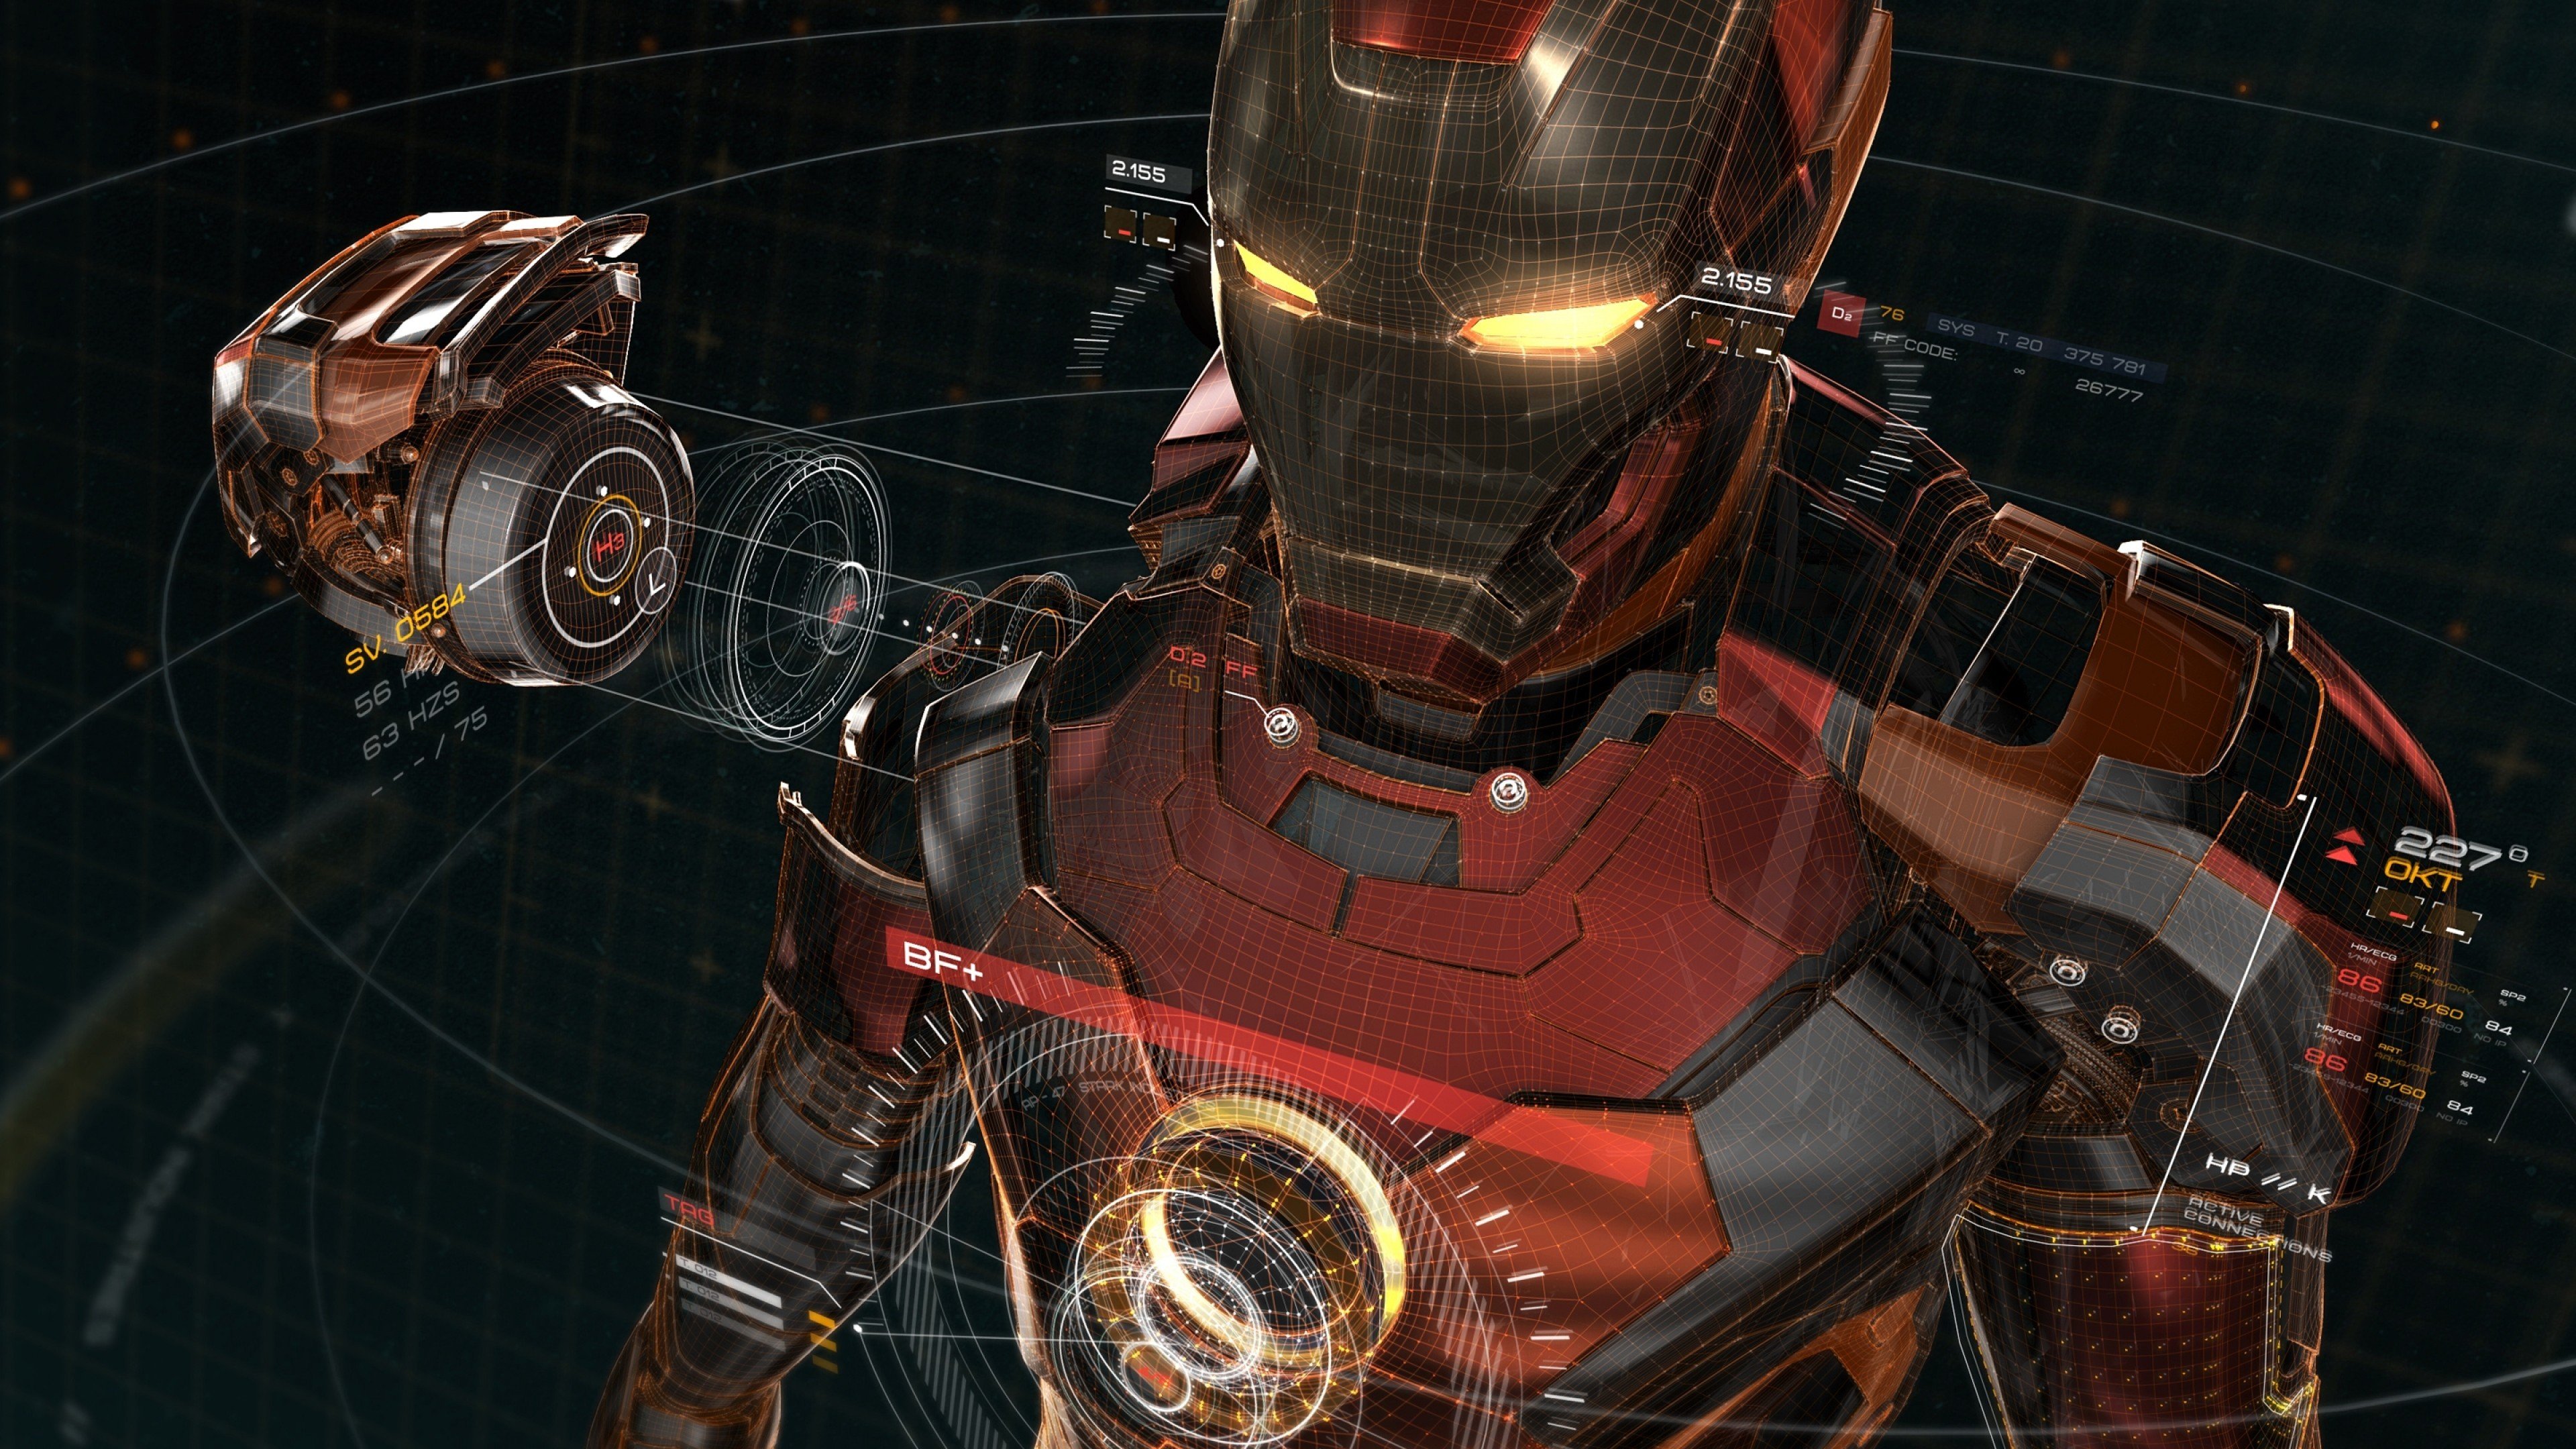 8200 Koleksi Gambar Iron Man Hd Gratis Terbaik